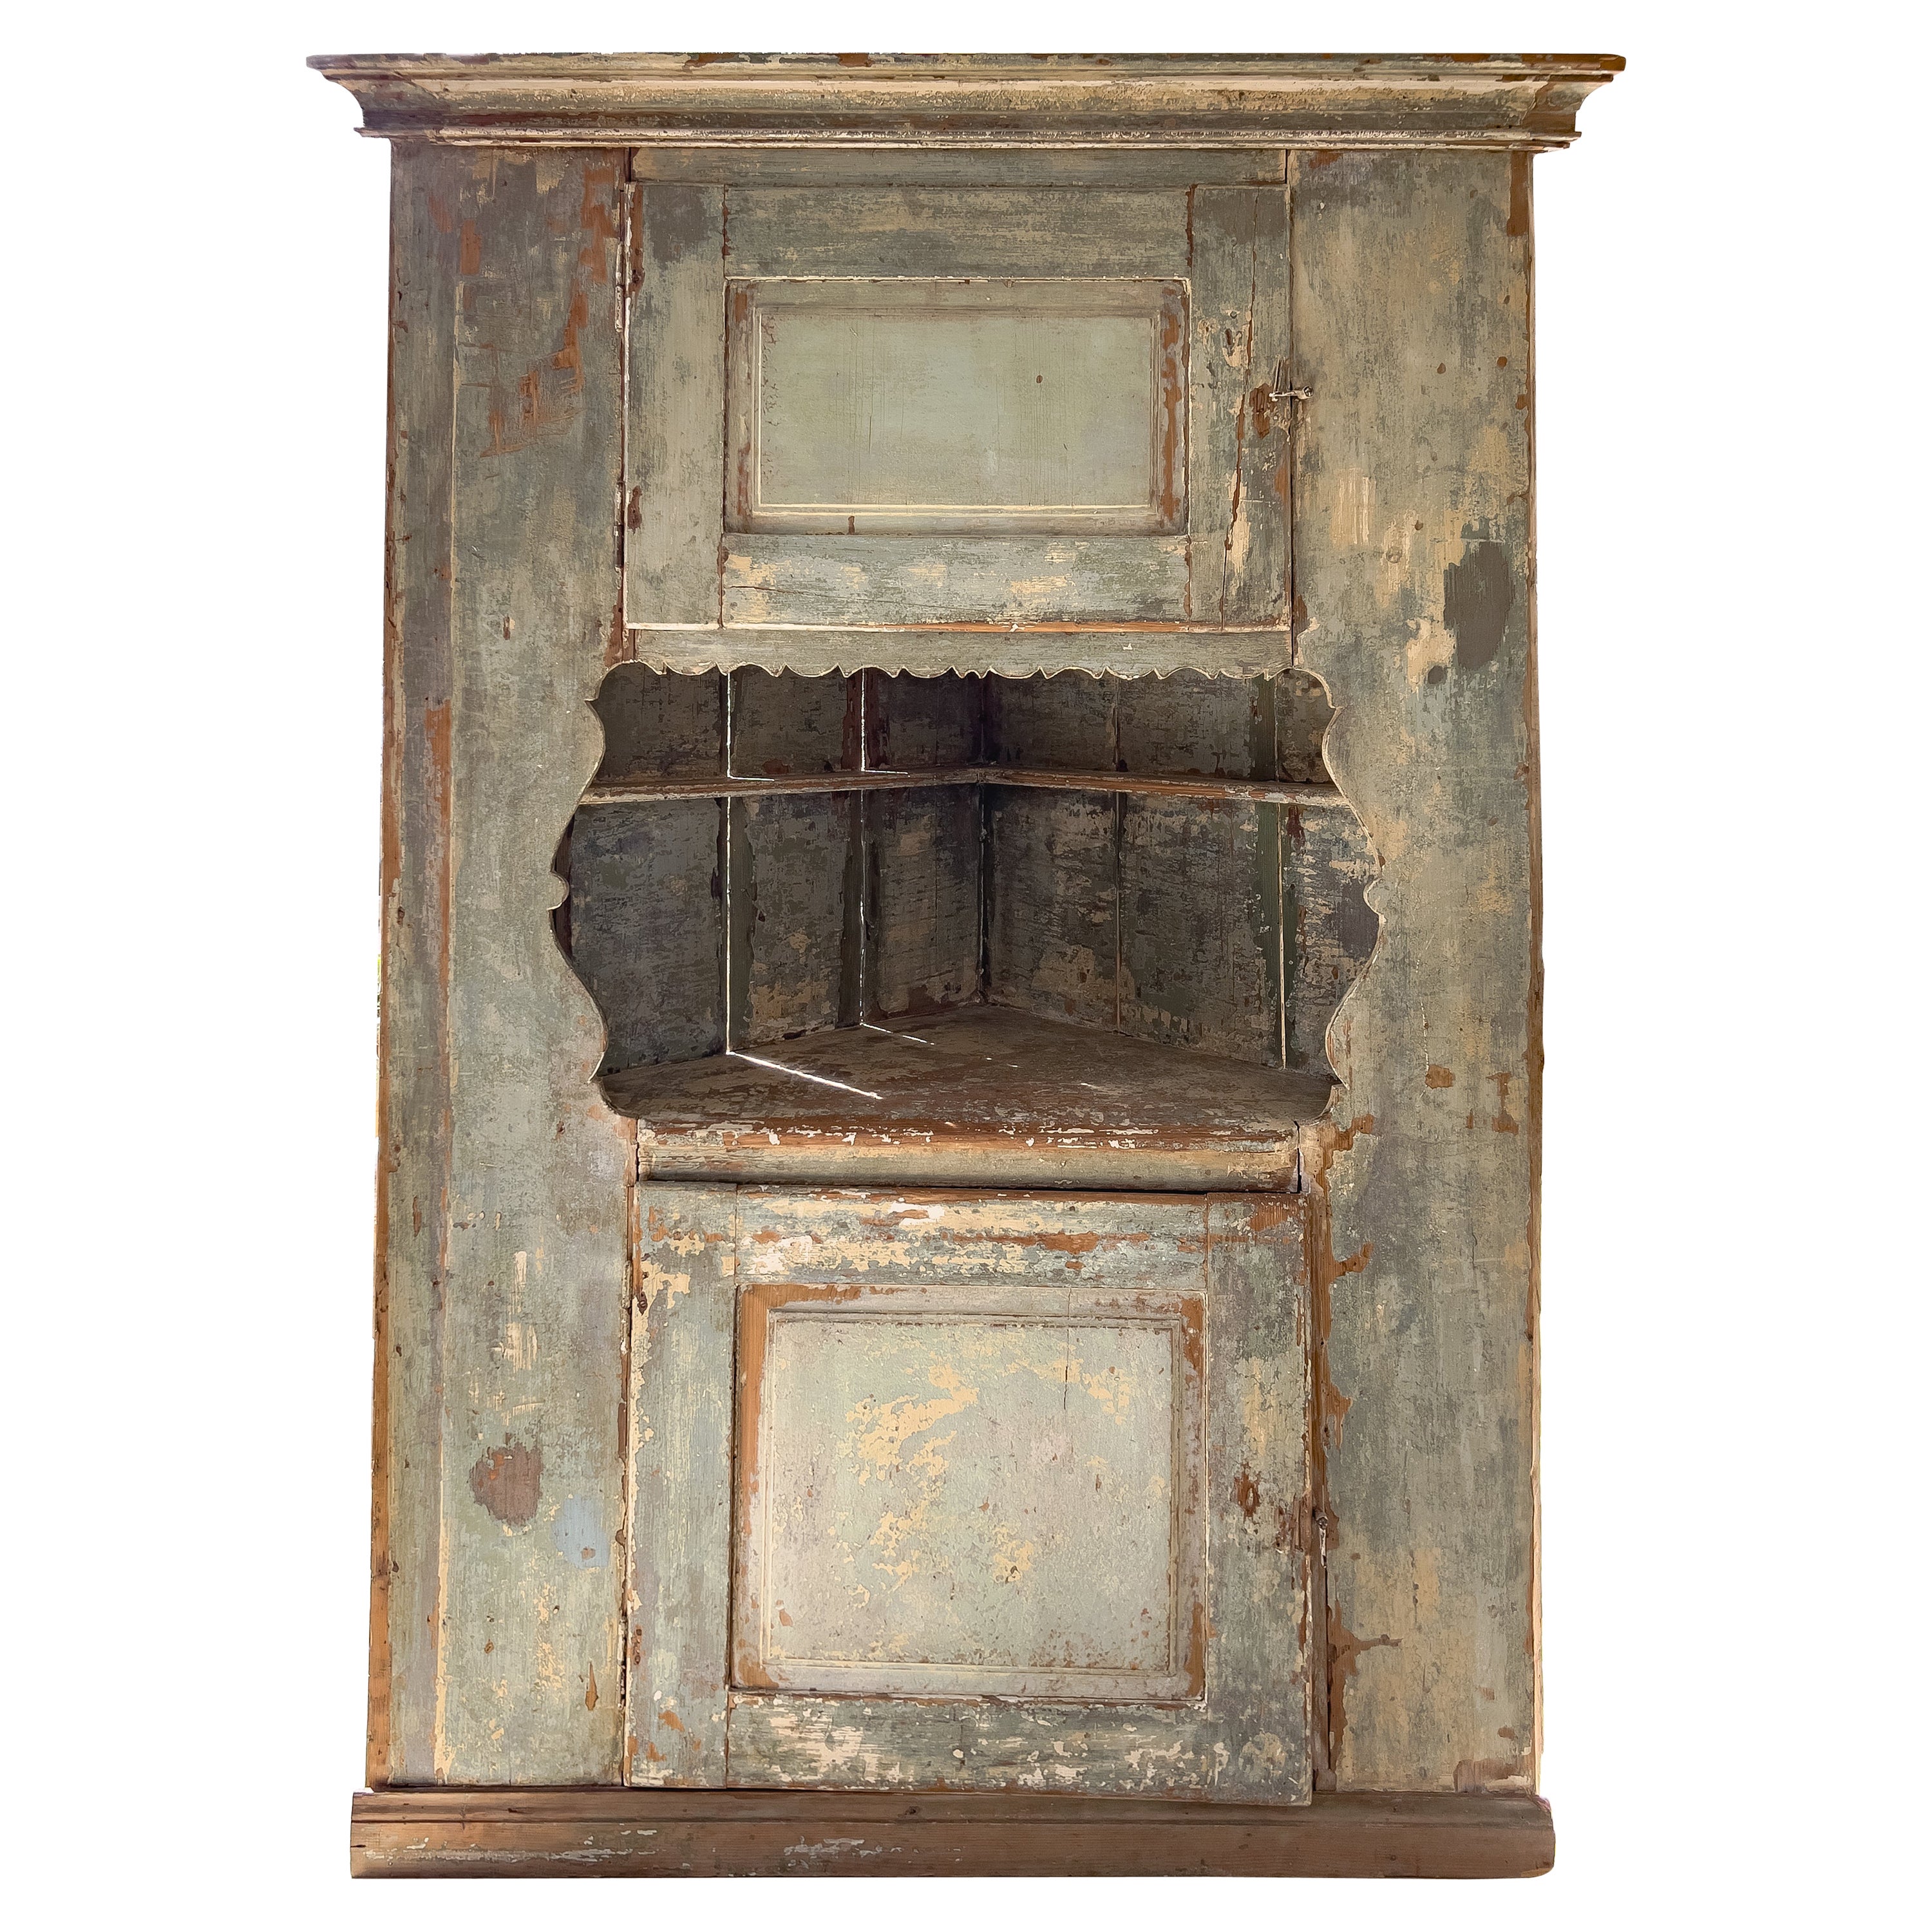 Swedish 18th Century Corner Cabinet Dry Scraped to perfection